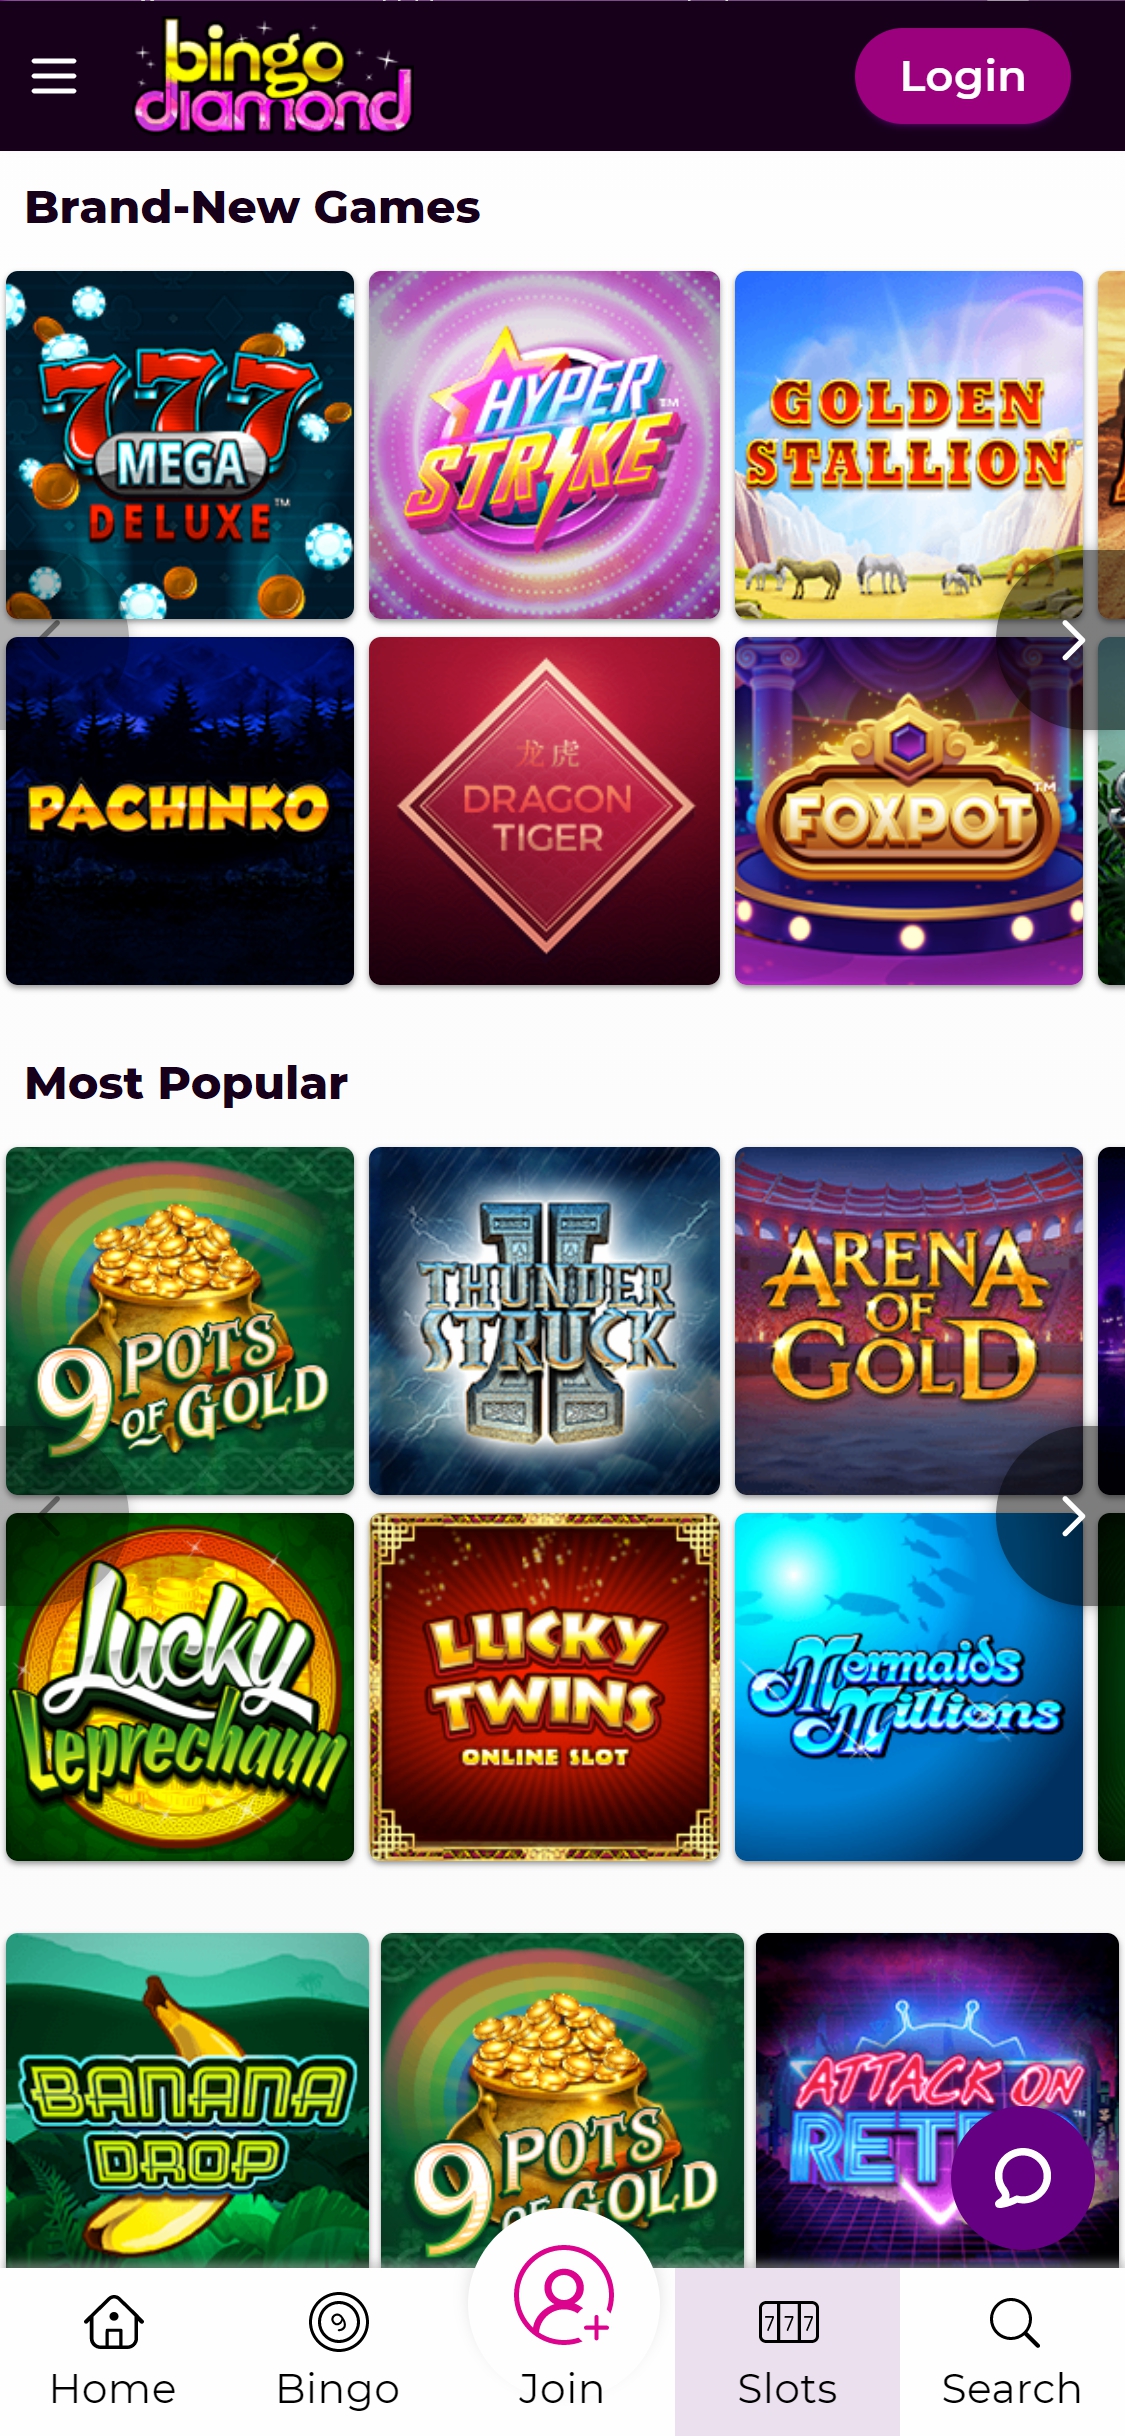 Bingo Diamond Casino Mobile Games Review